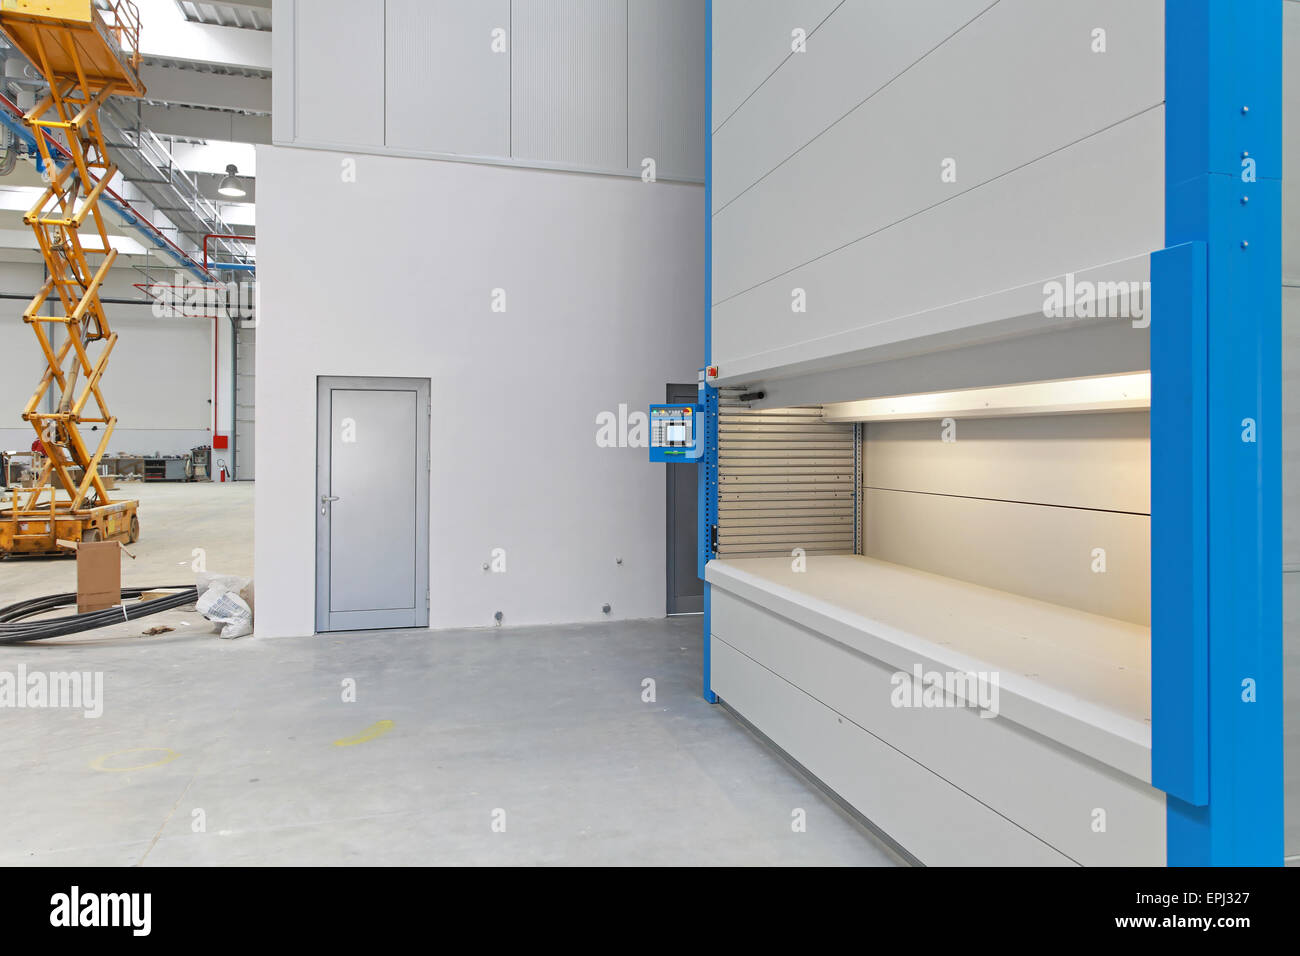 Warehouse shelving system Stock Photo